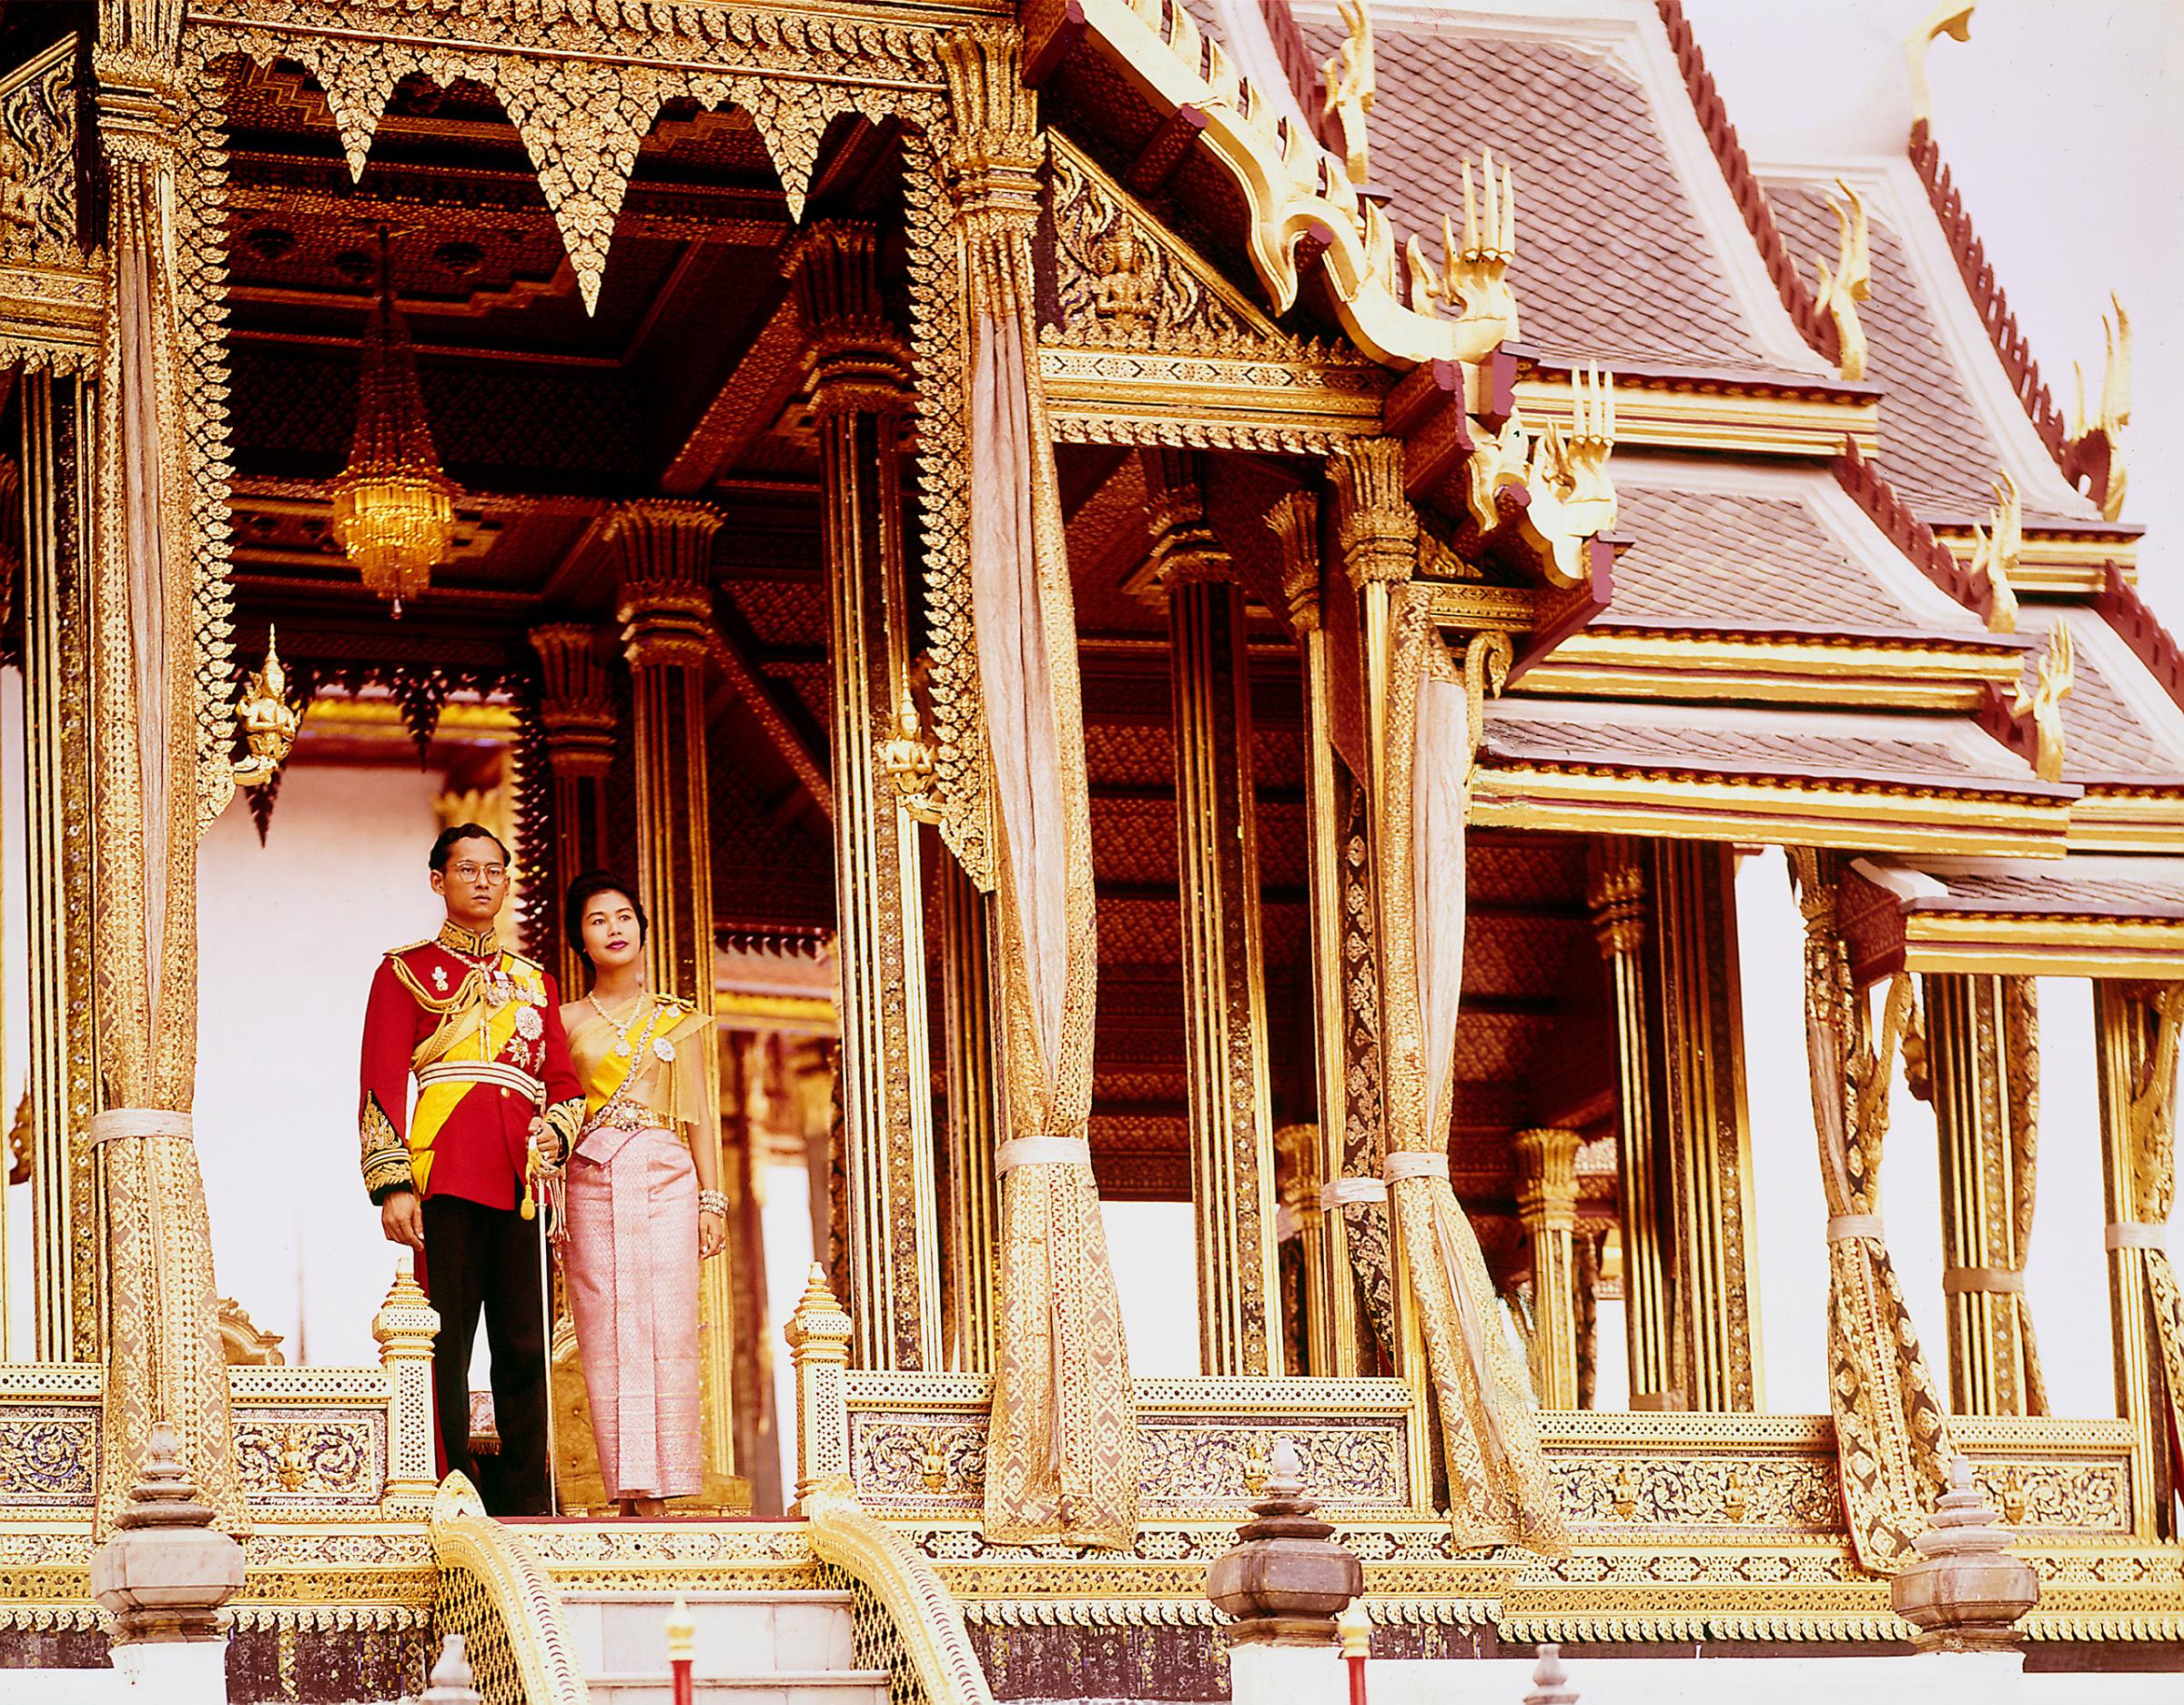 Thailand's King Bhumibol Adulyadej (aka Phumiphon Aduldet) with wife Queen Sirikit at the Palace, 1960.